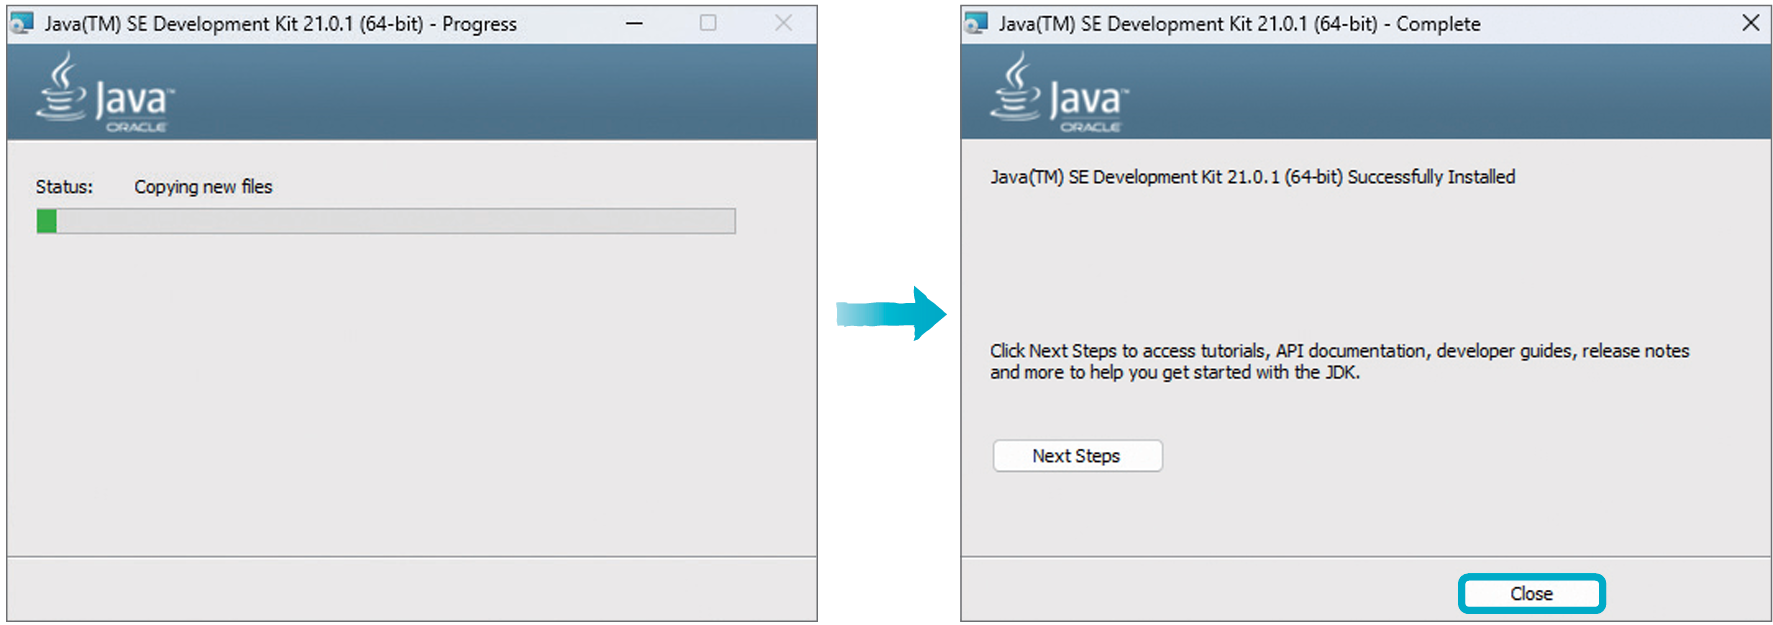 Java(TM) SE Development Kit 21.0.1_2.